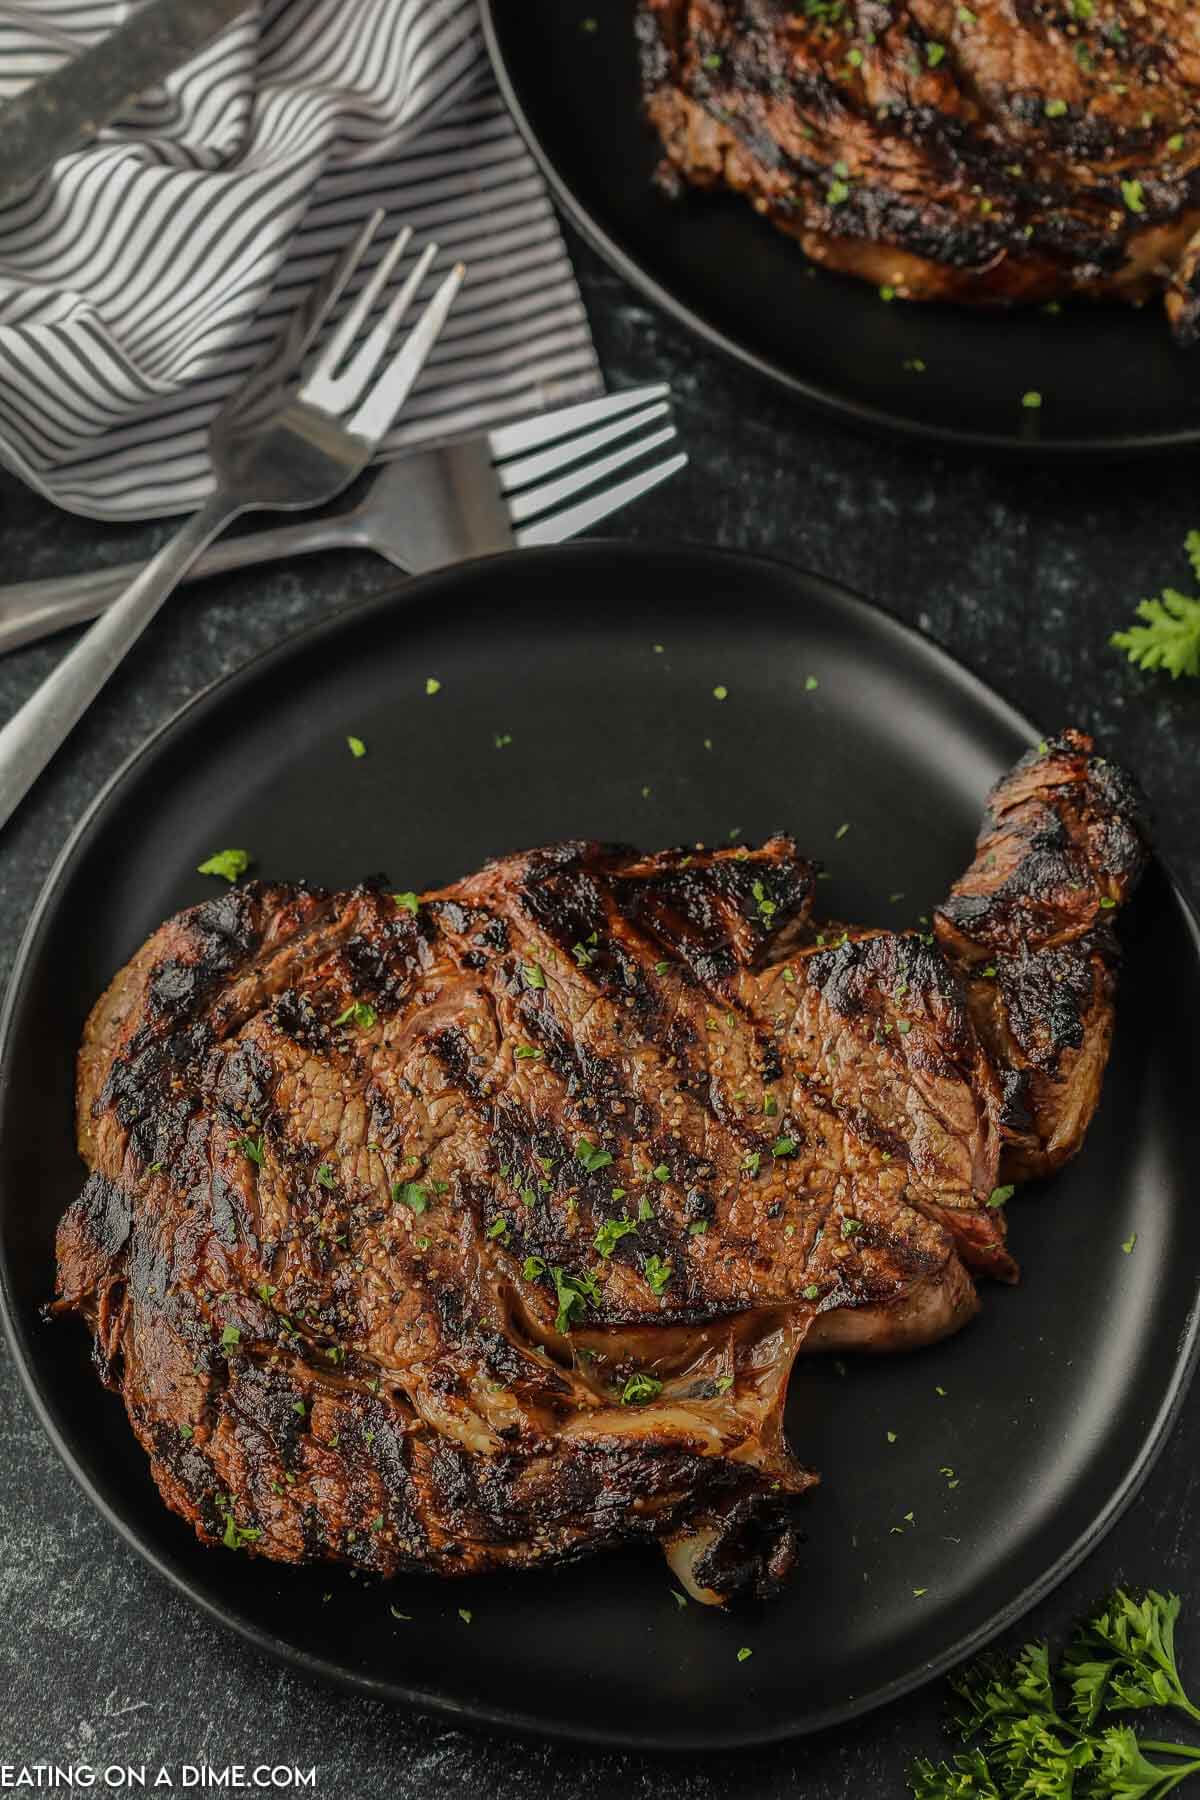 Steak on a plate. 